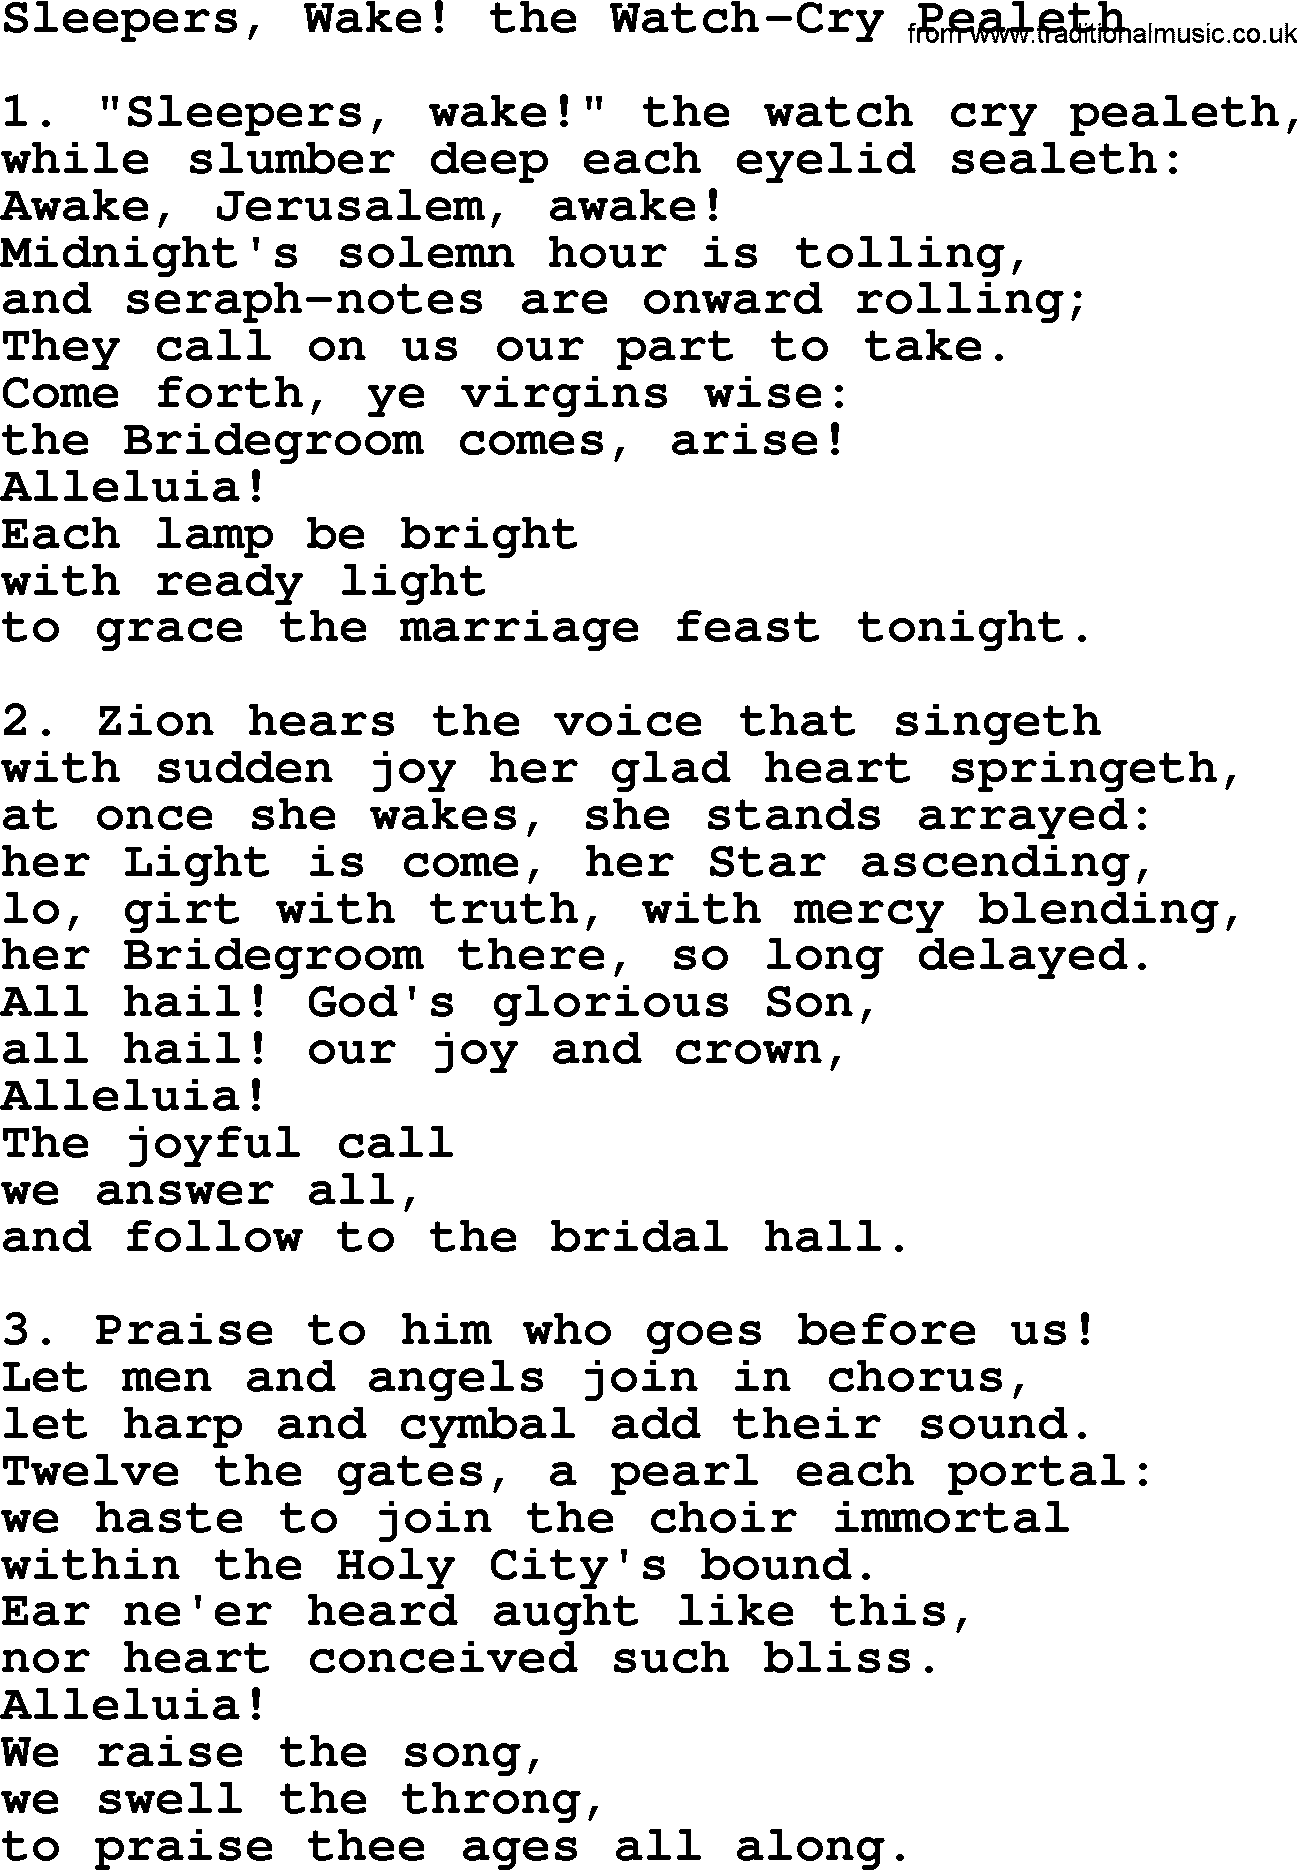 Advent Hymns, Hymn: Sleepers, Wake! The Watch-Cry Pealeth, lyrics with PDF